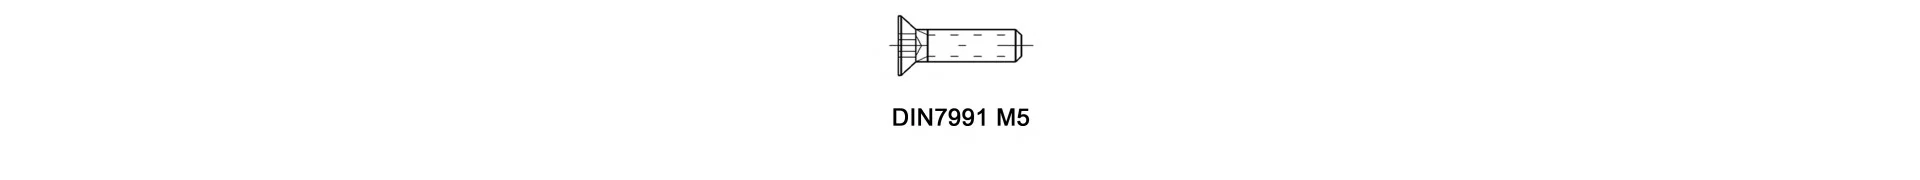 DIN7991 M5